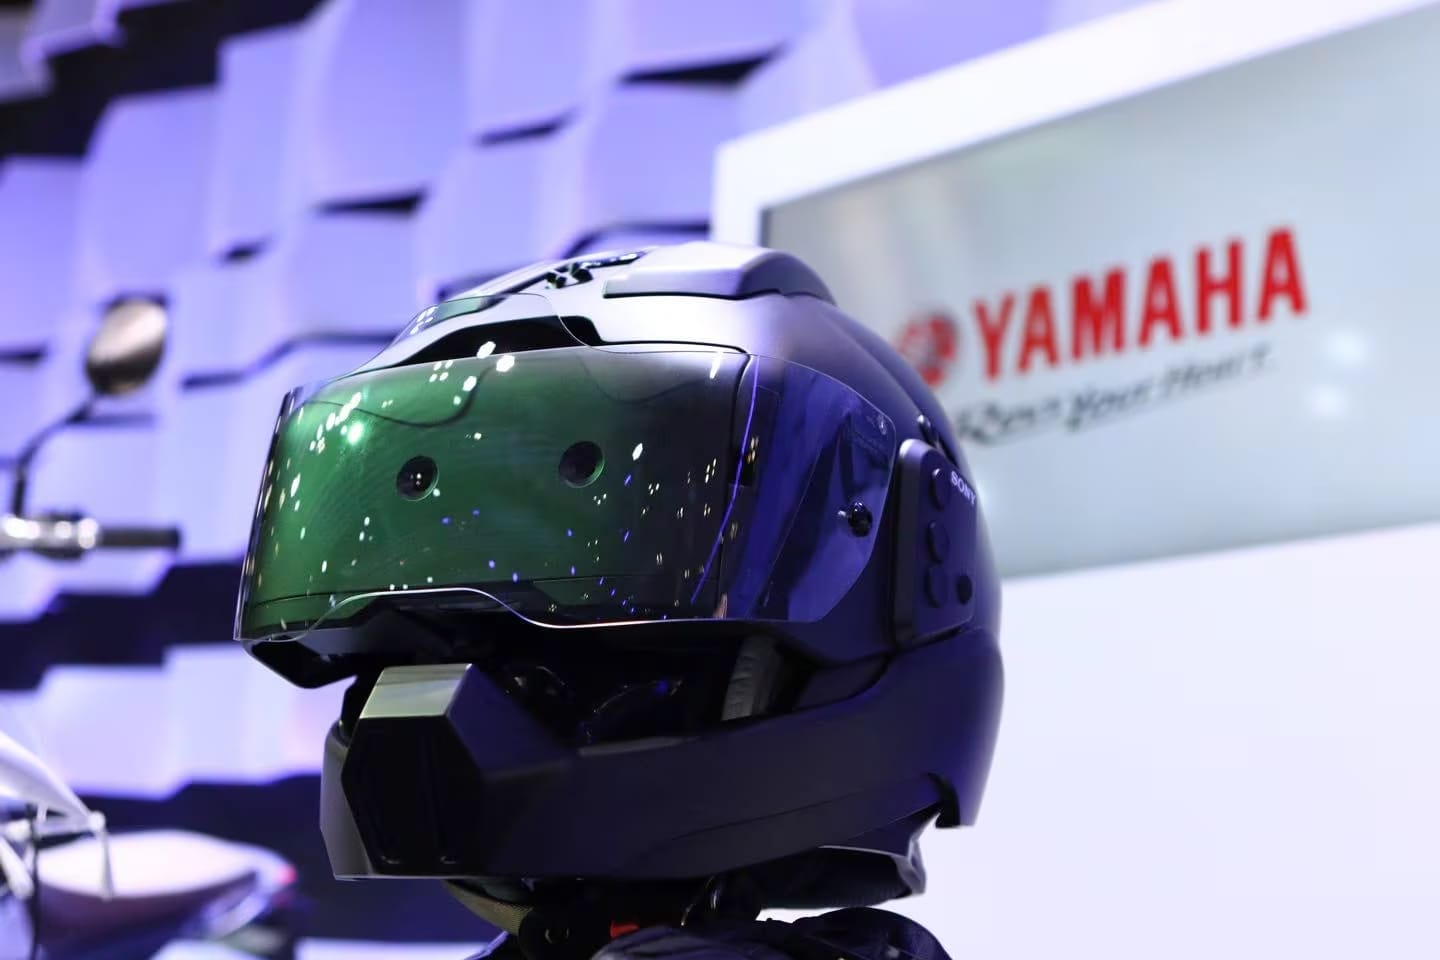 Yamaha: A leap into augmented reality